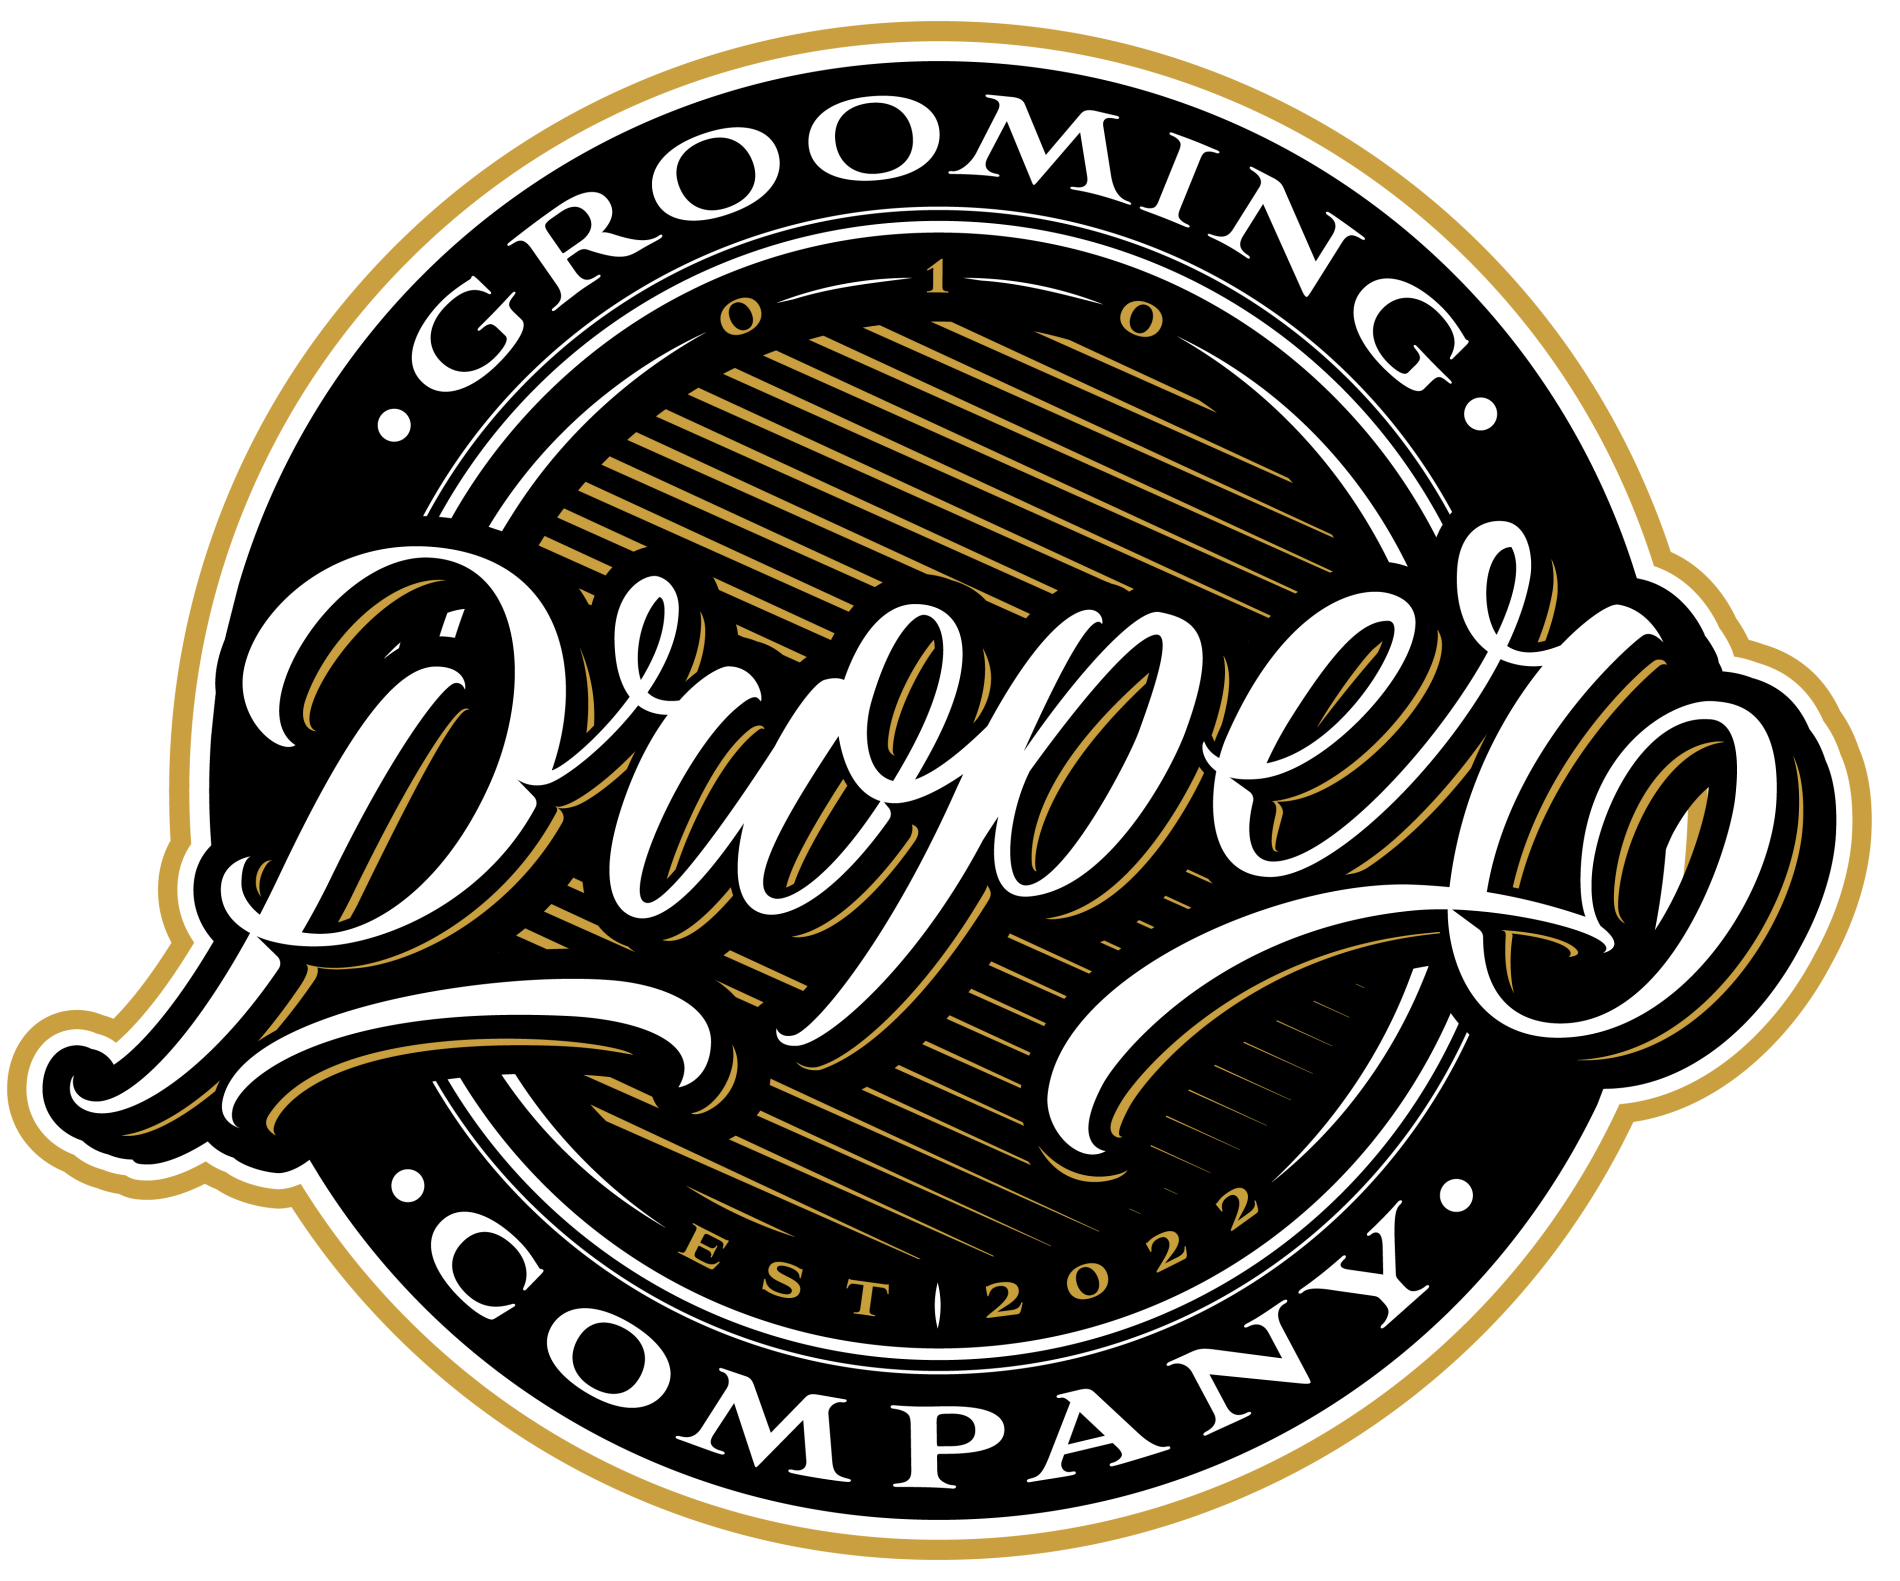 Proper Grooming Company Logo